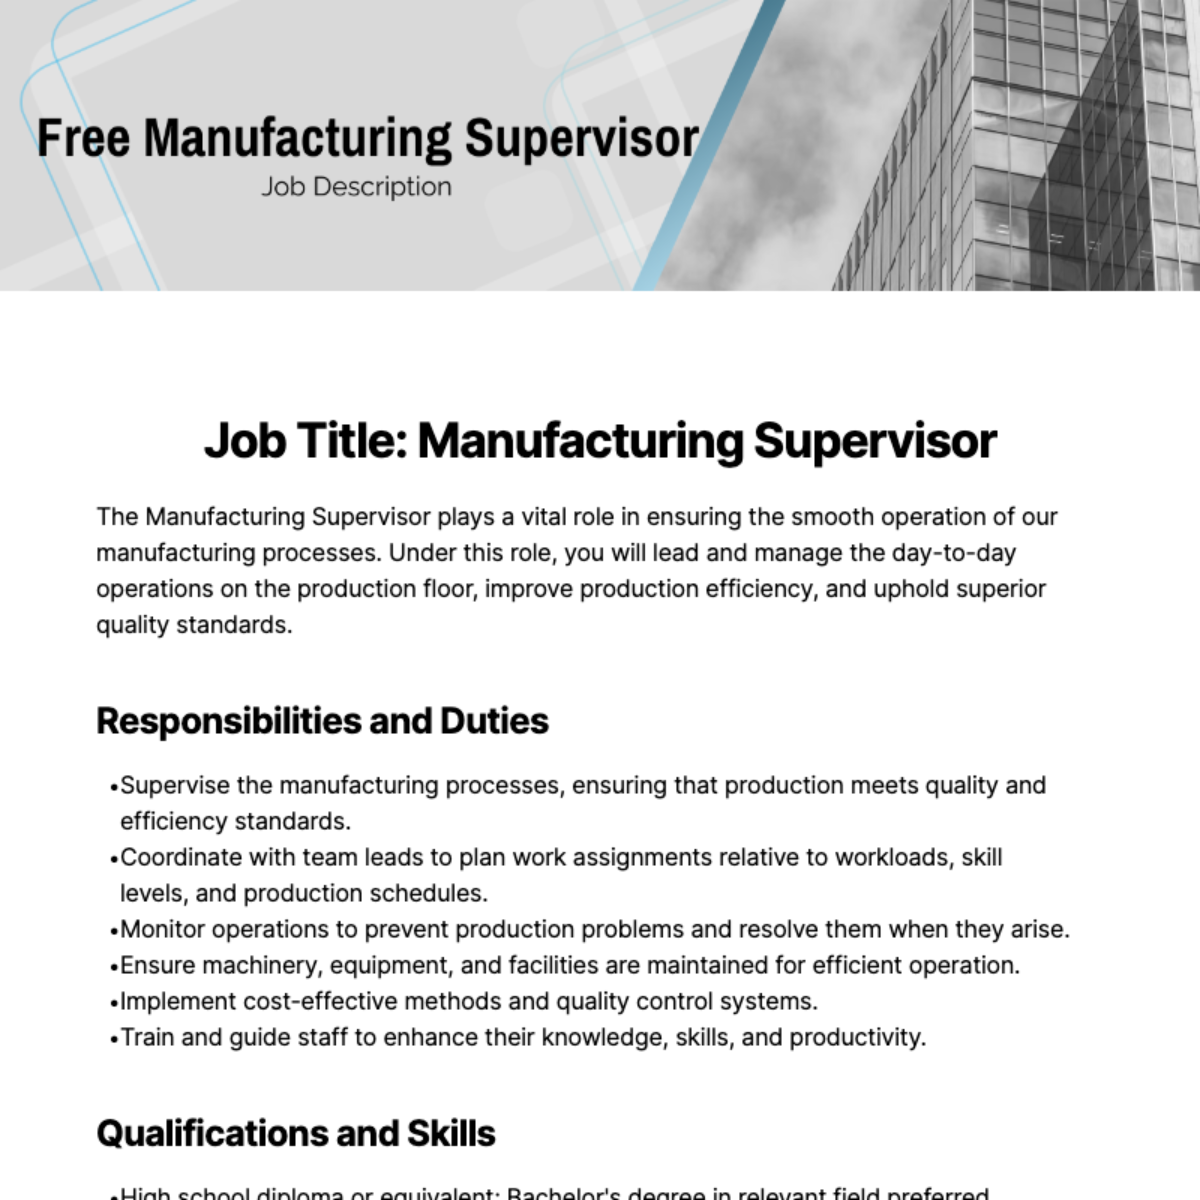 Free Manufacturing Supervisor Job Description Template